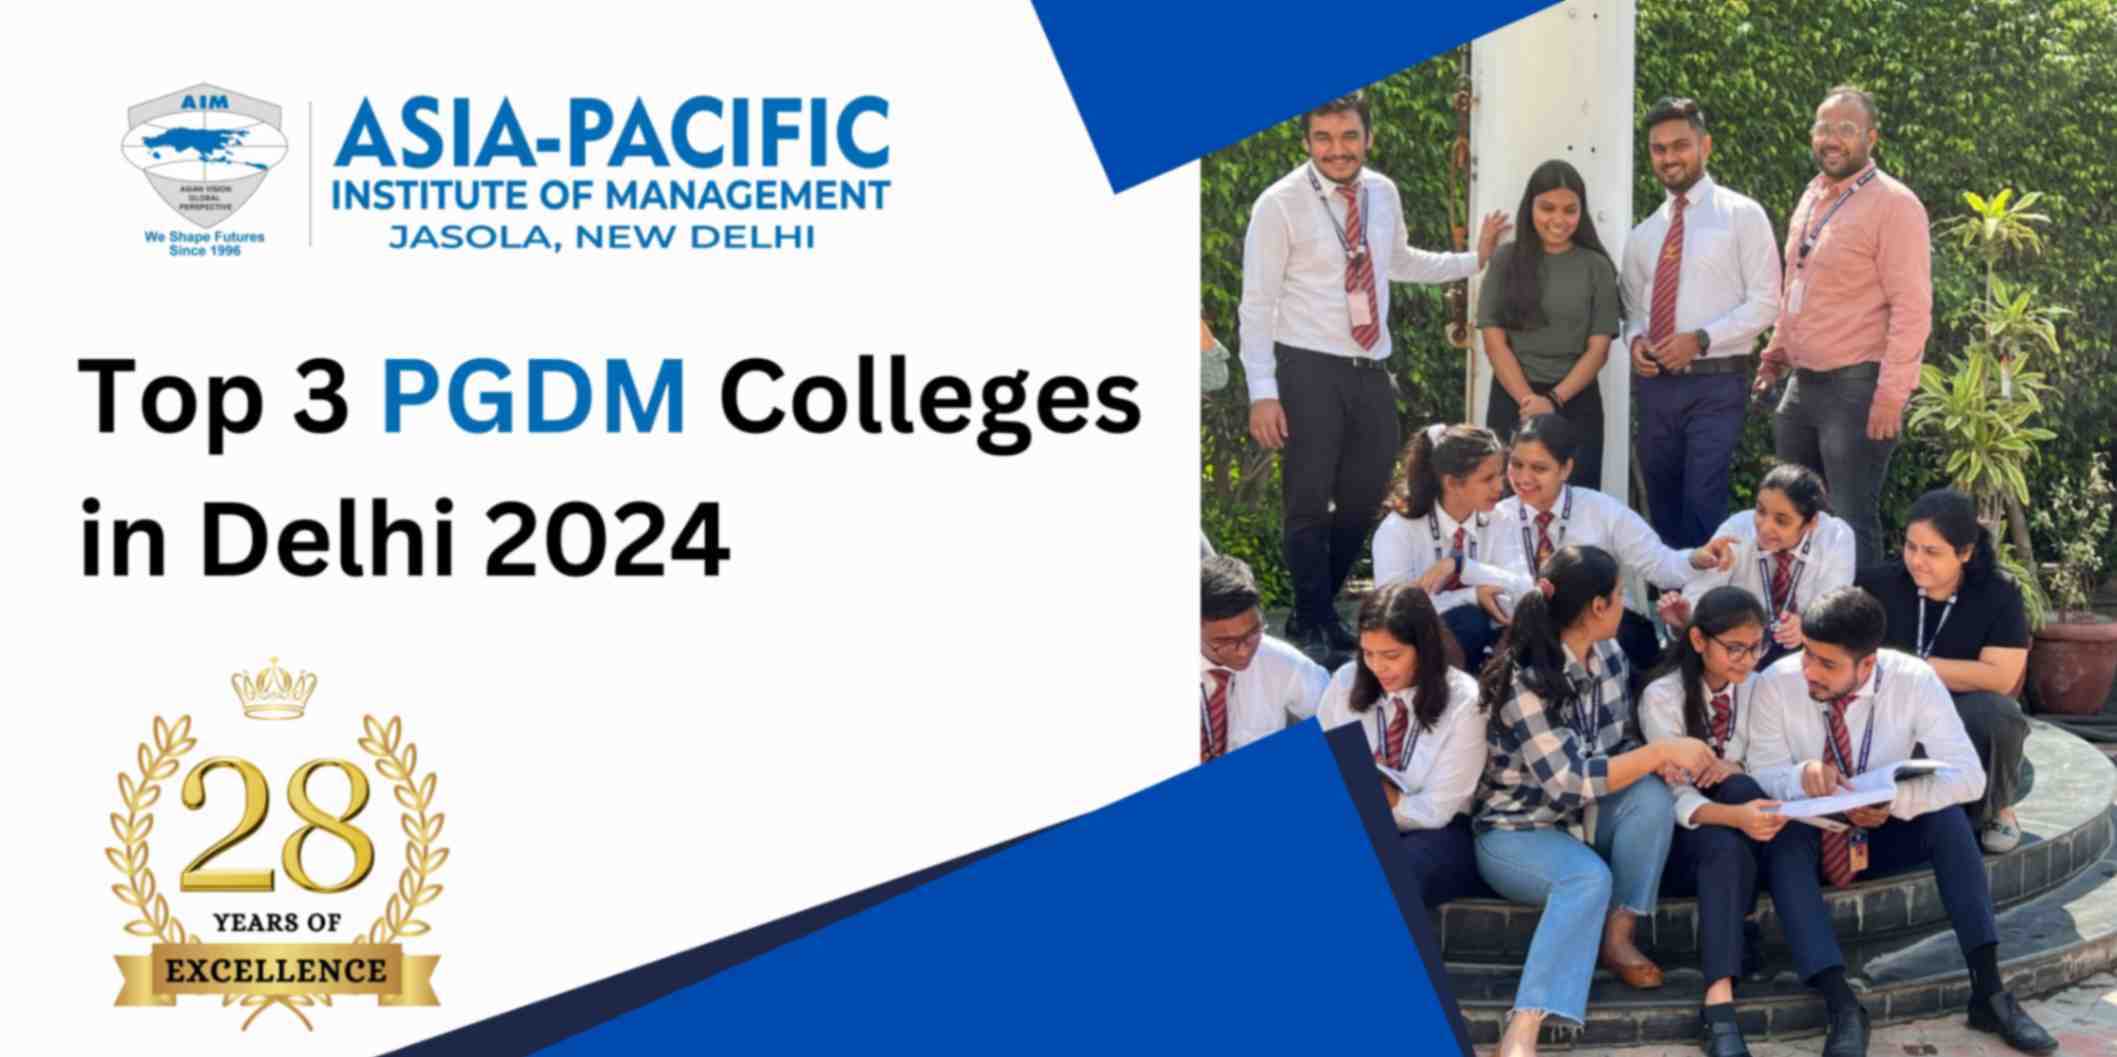 Top 3 PGDM Colleges in Delhi 2024